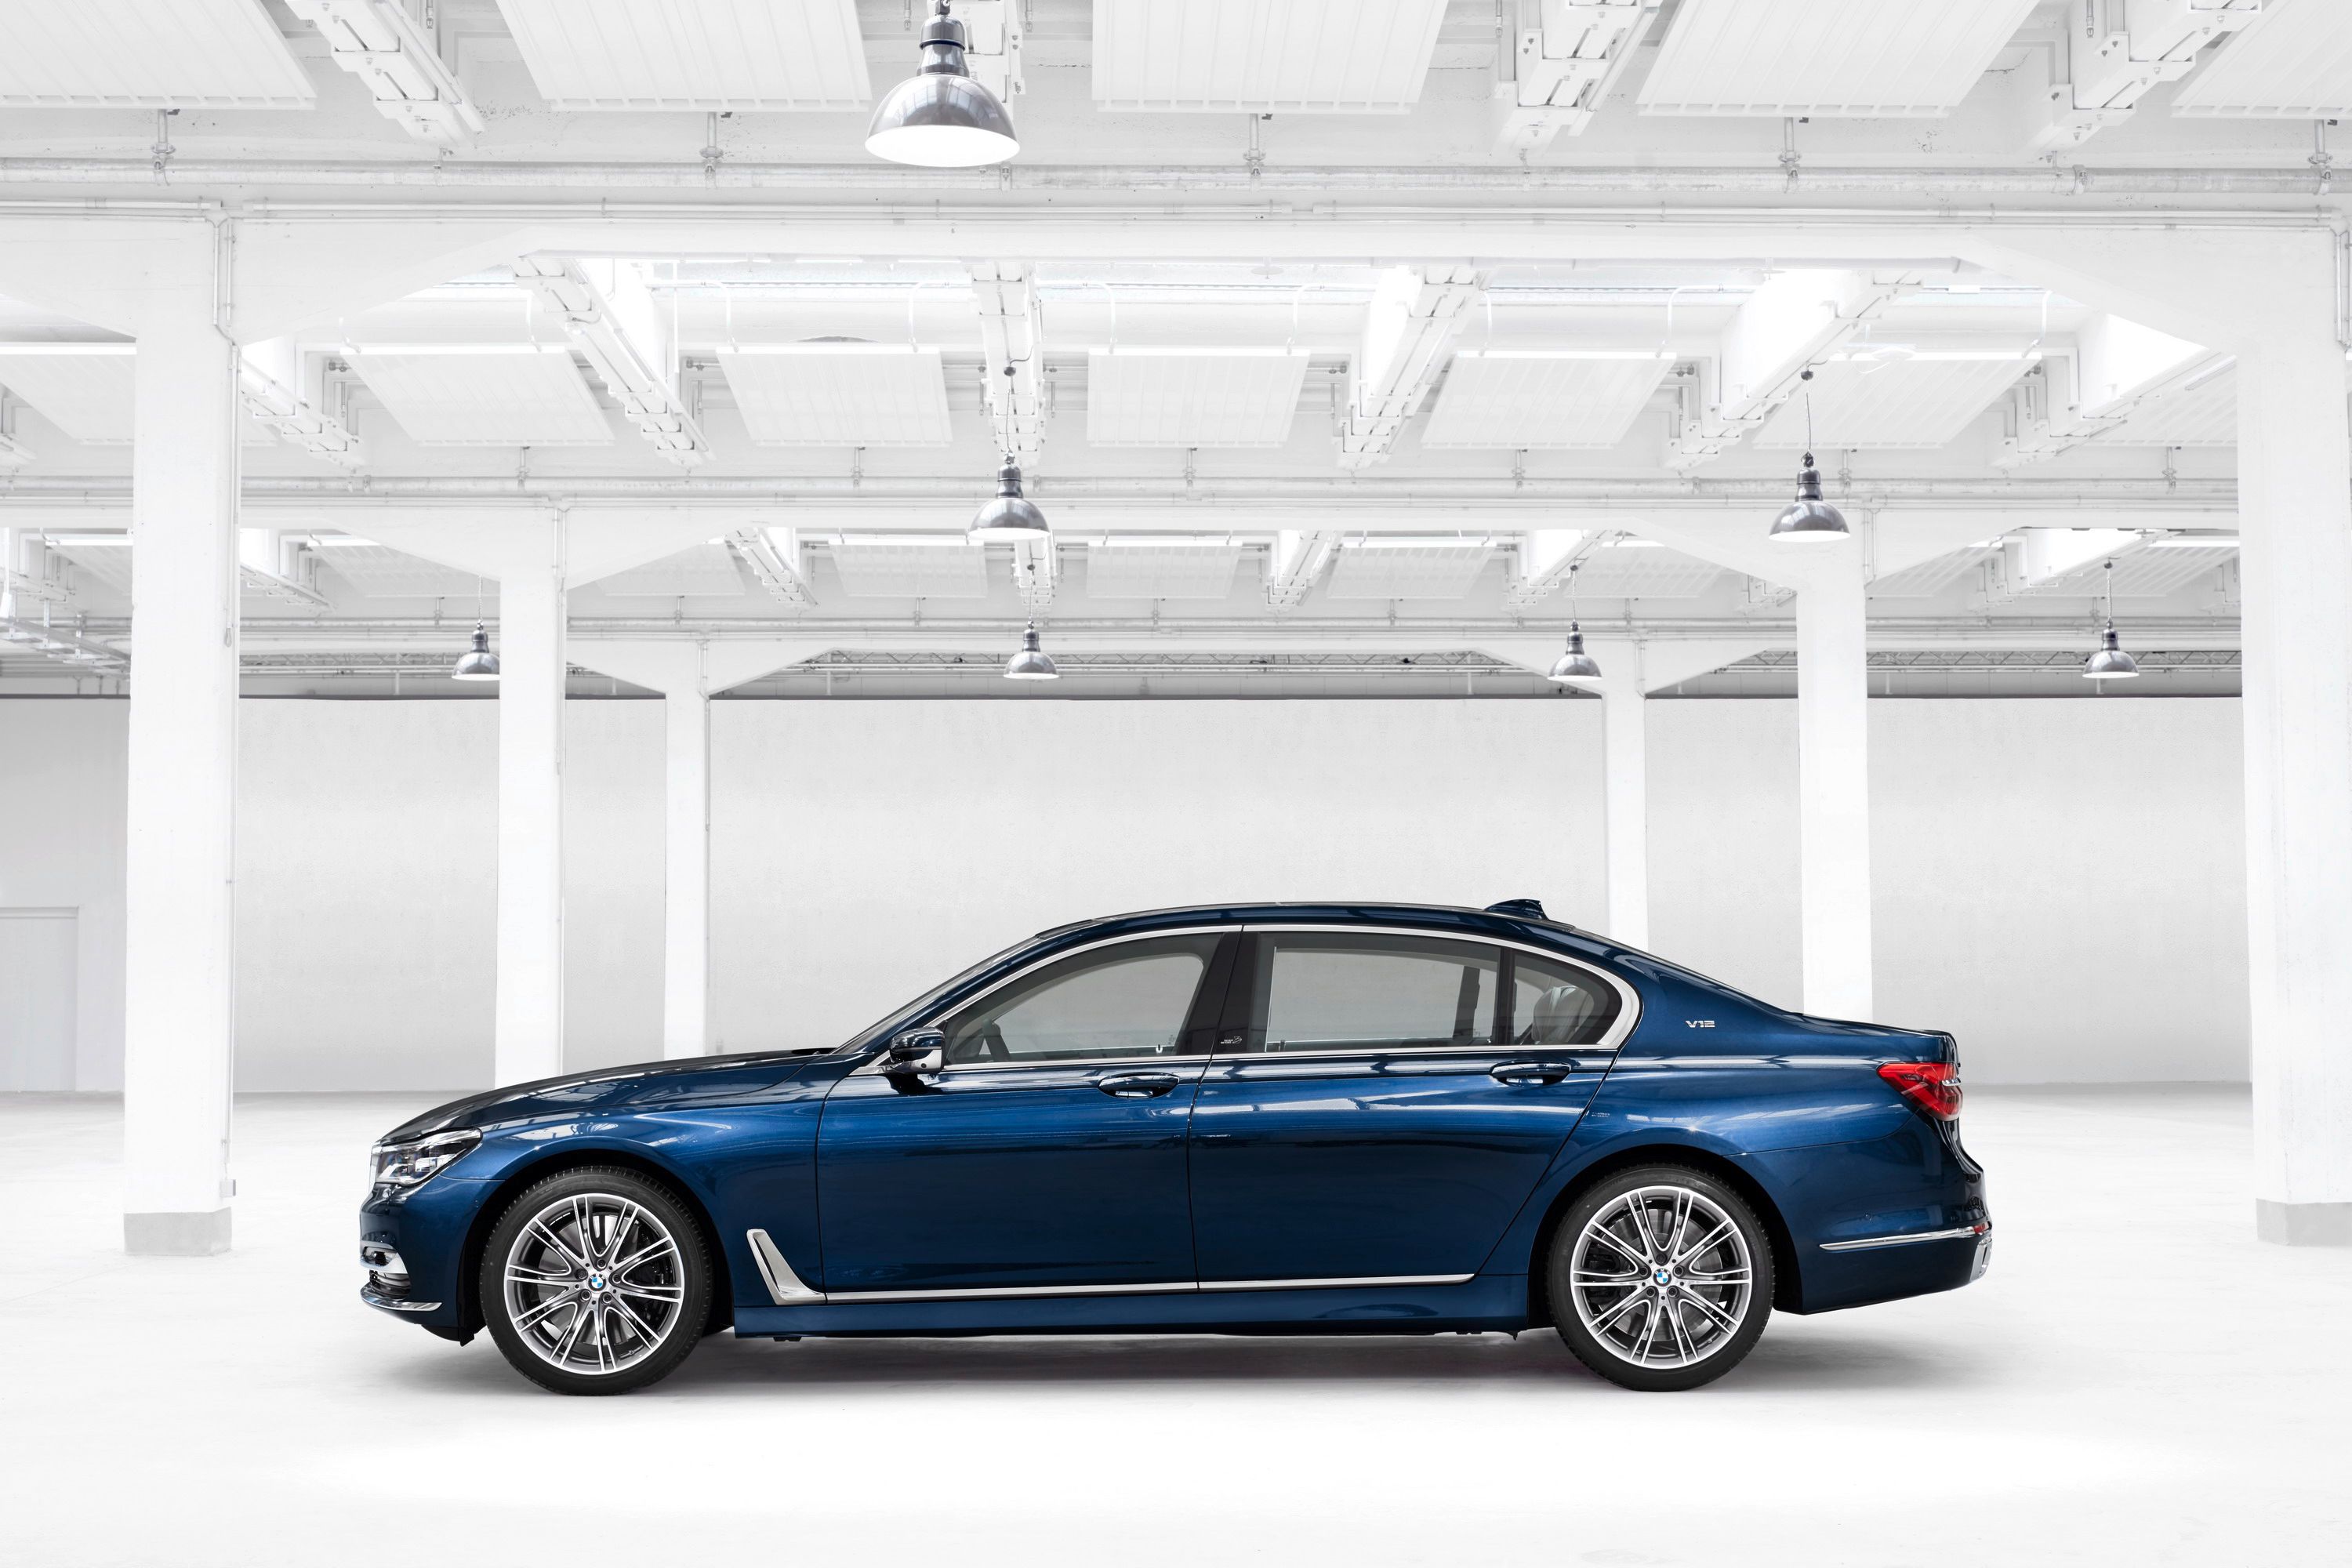 2017 BMW 7 Series Centennial Edition